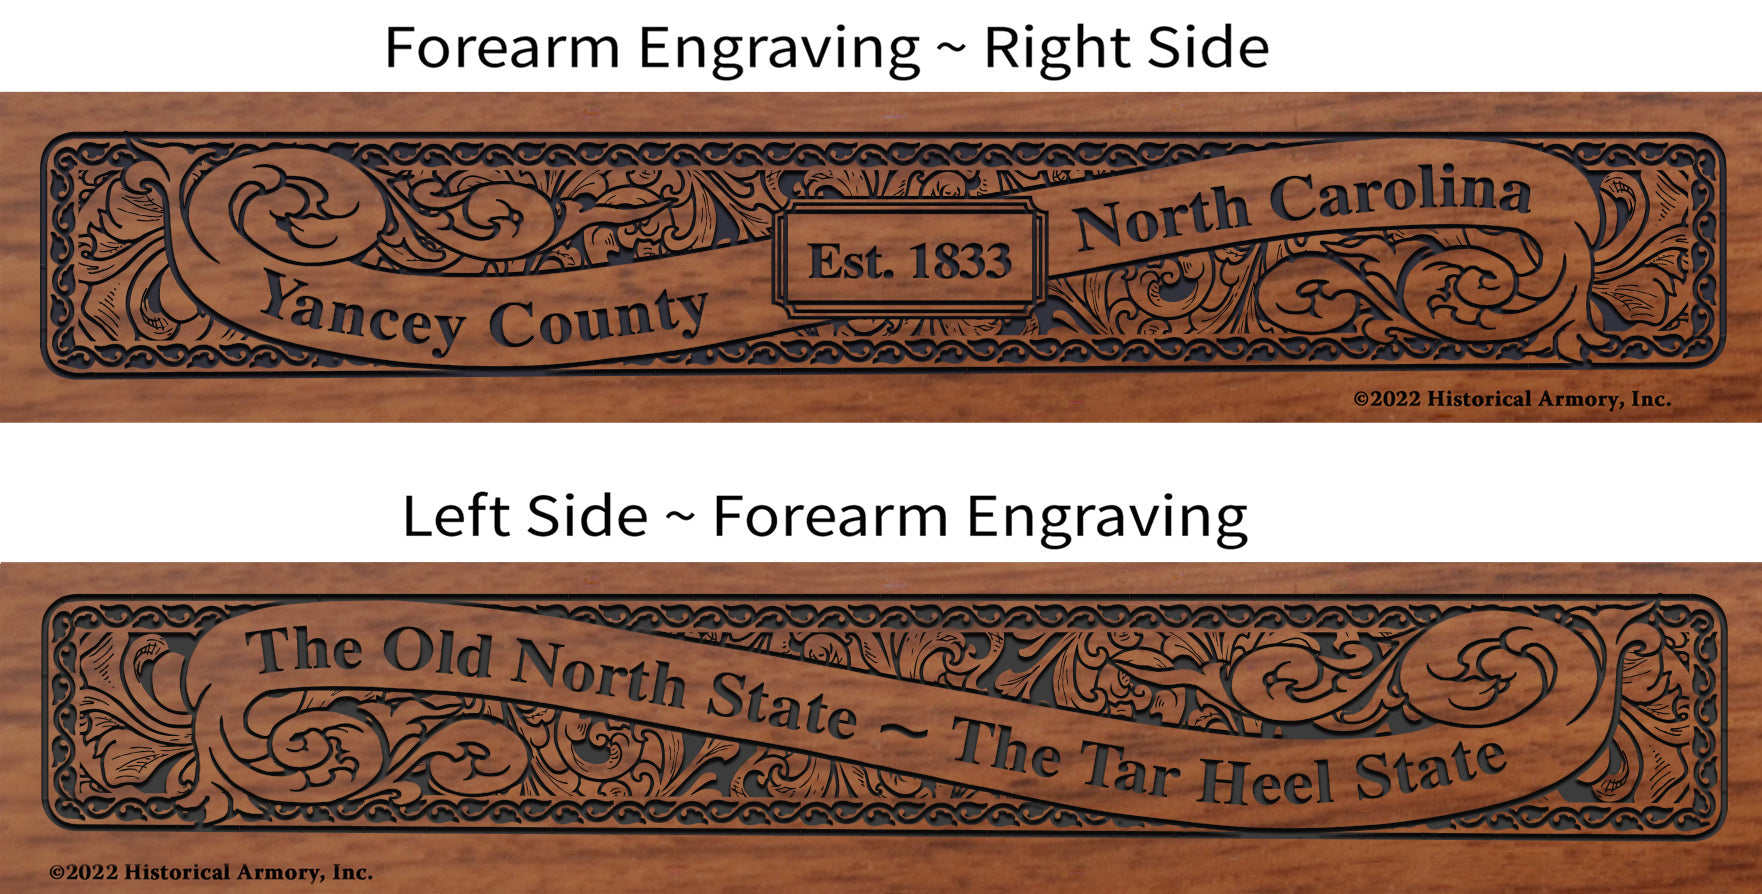 Yancey County North Carolina Engraved Rifle Forearm